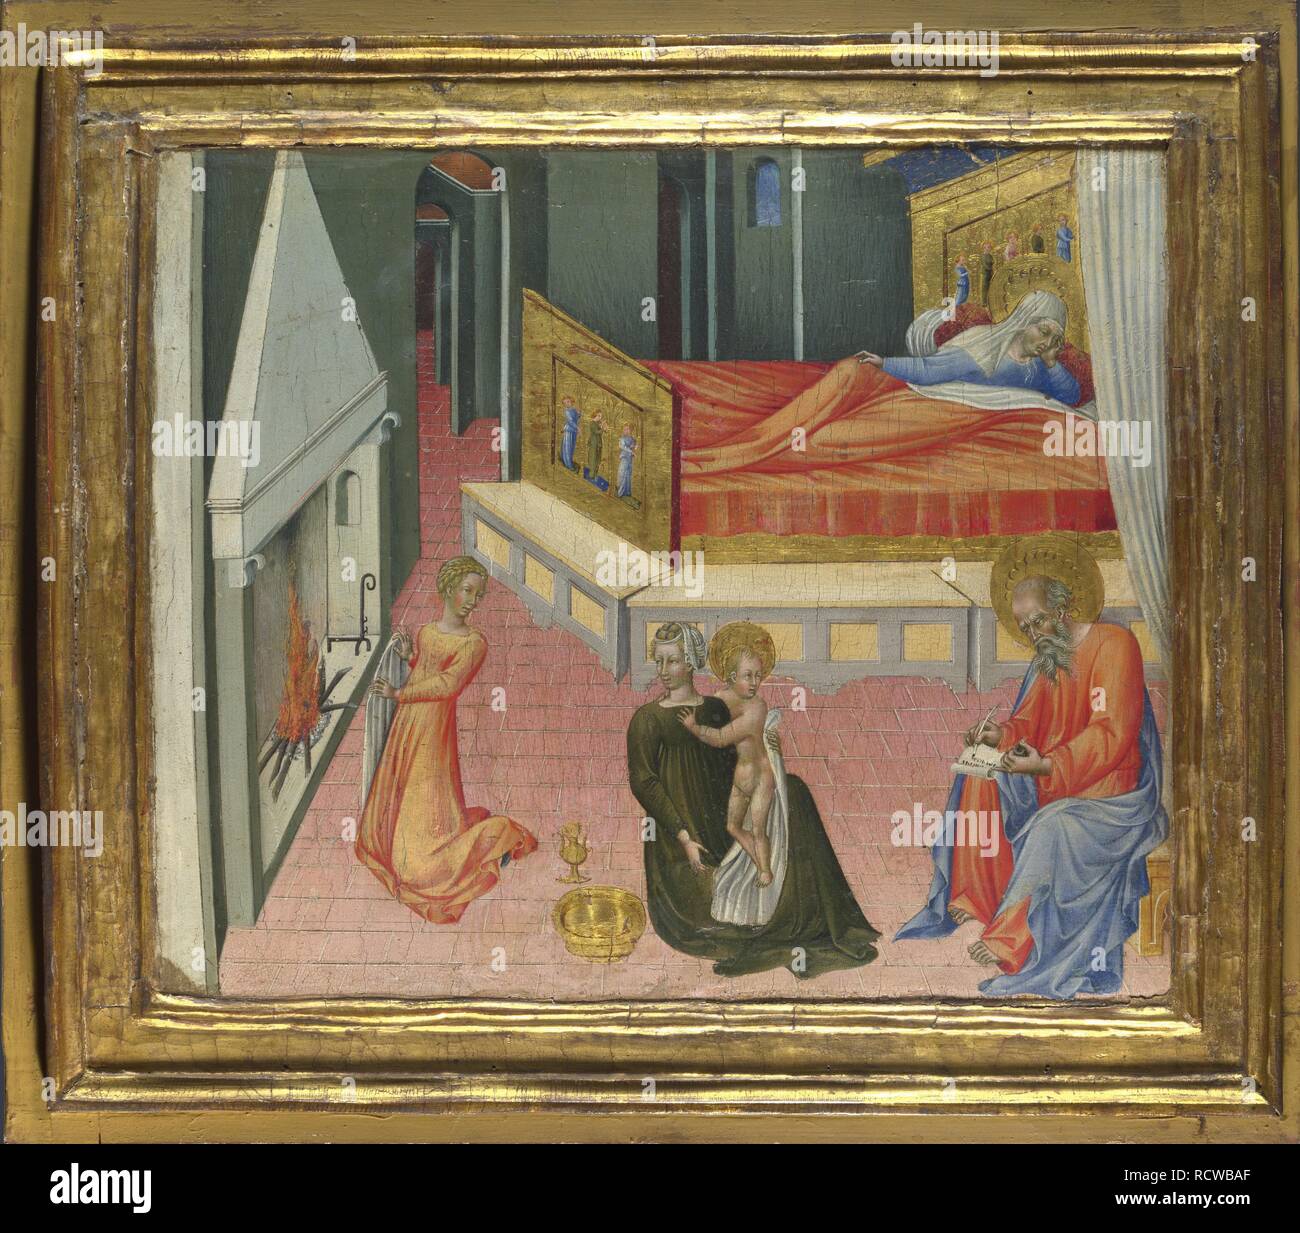 The Birth of Saint John the Baptist (Predella Panel). Museum: National Gallery, London. Author: GIOVANNI DI PAOLO. Stock Photo